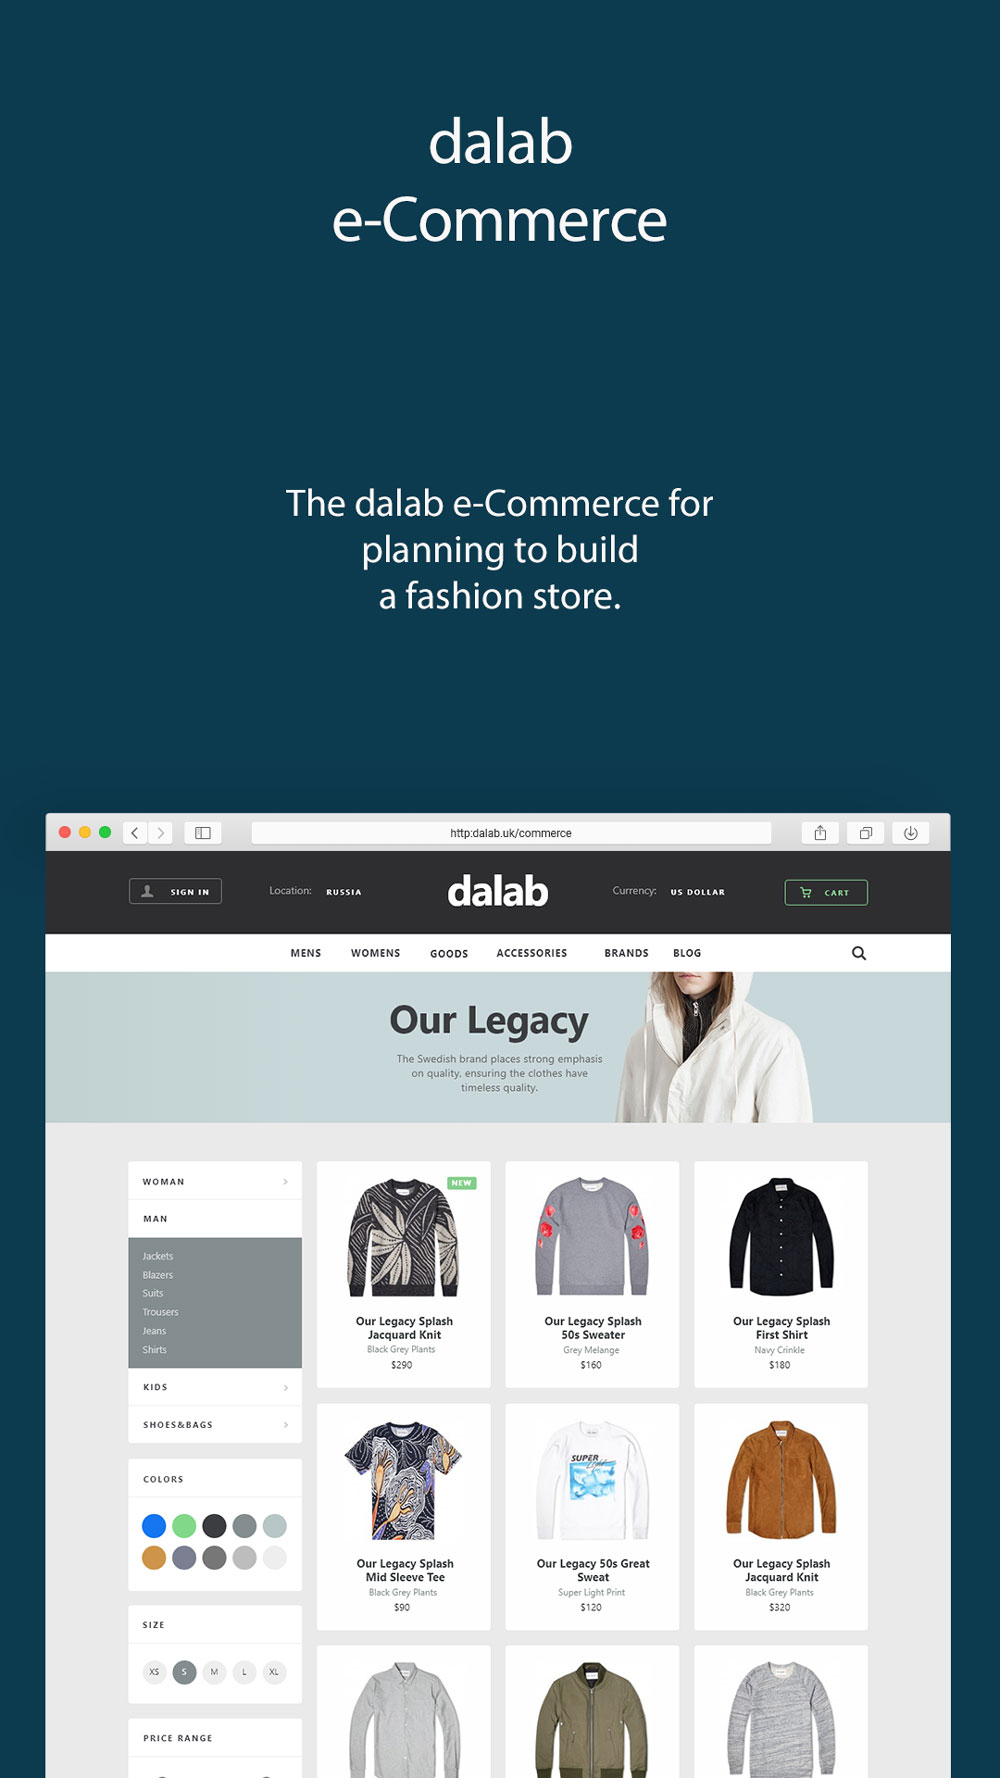 dalab e-Commerce